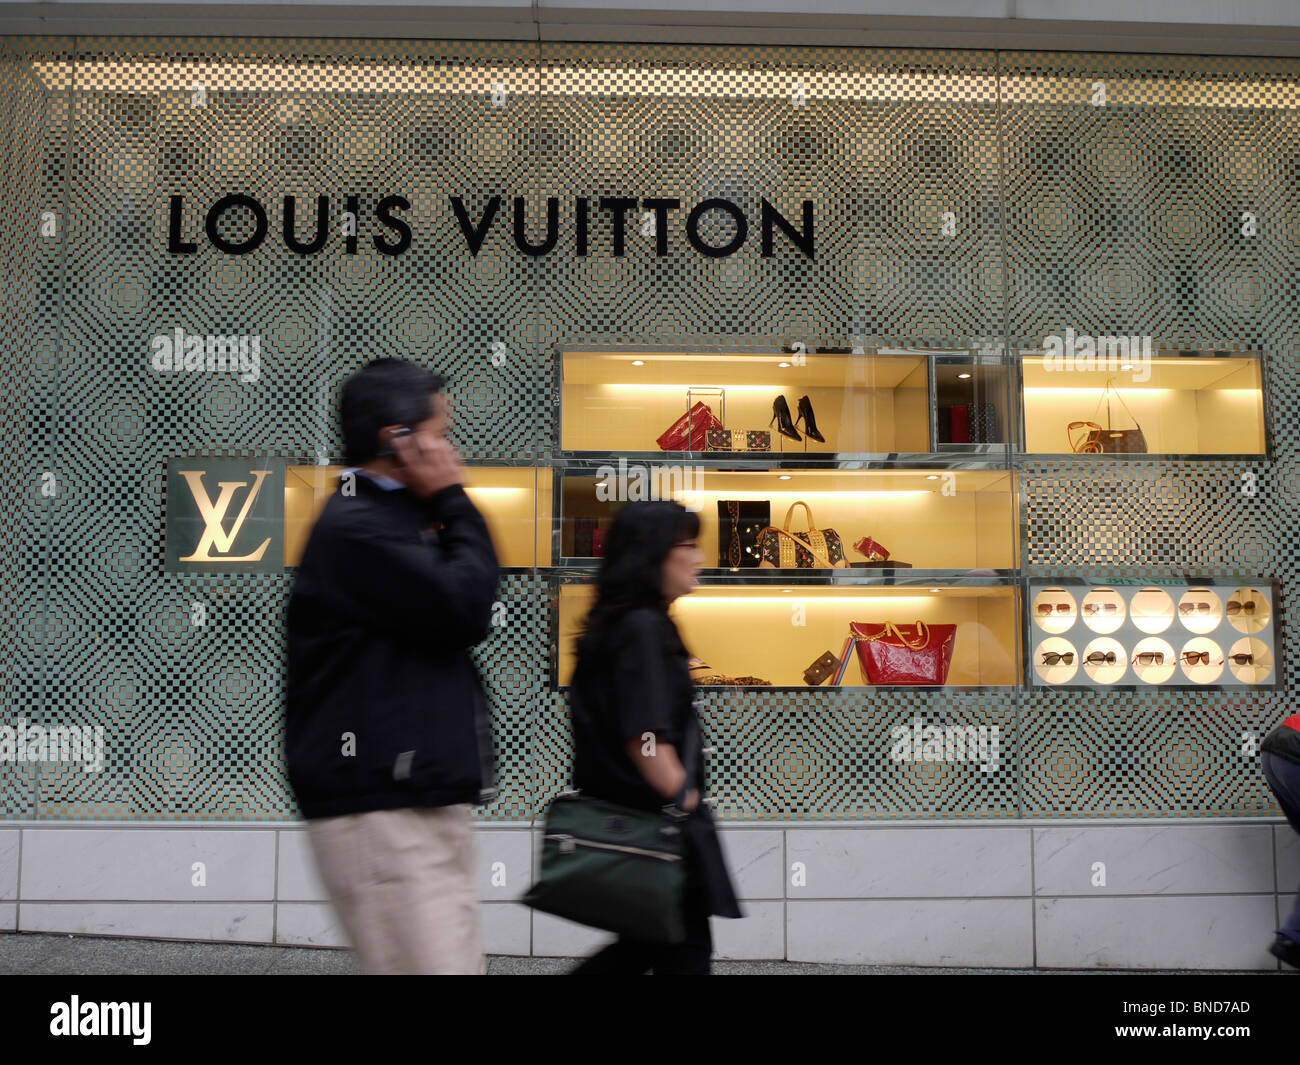 Louis Vuitton Handbags Outlet Store